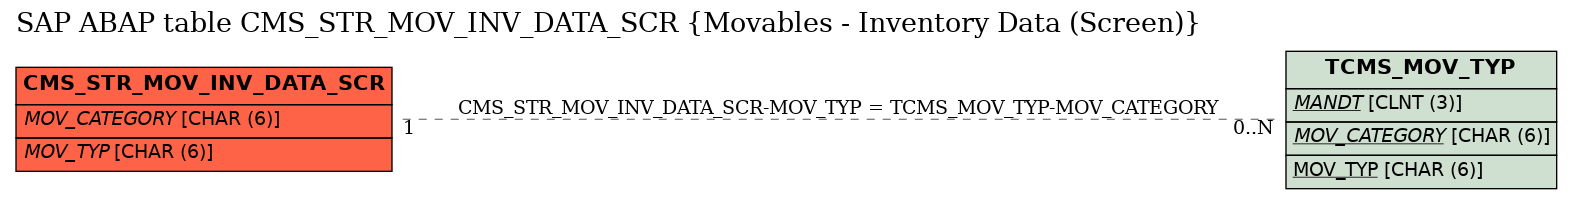 E-R Diagram for table CMS_STR_MOV_INV_DATA_SCR (Movables - Inventory Data (Screen))